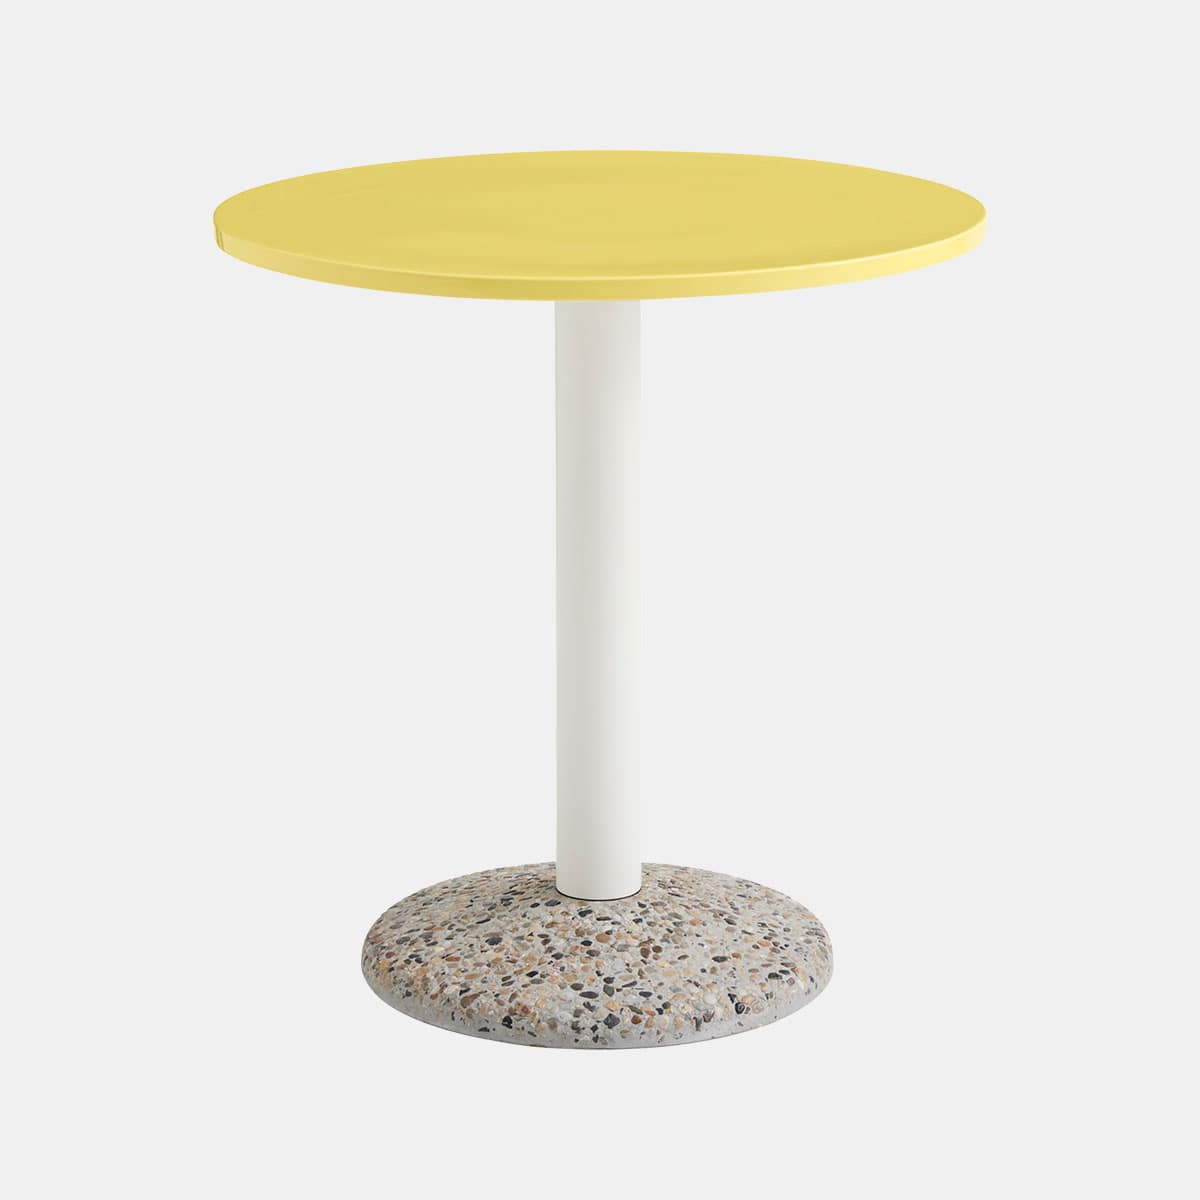 hay-muller-van-severen-ceramic-table-outdoor-70x73-bright-yellow-cream-white-concrete-001shop